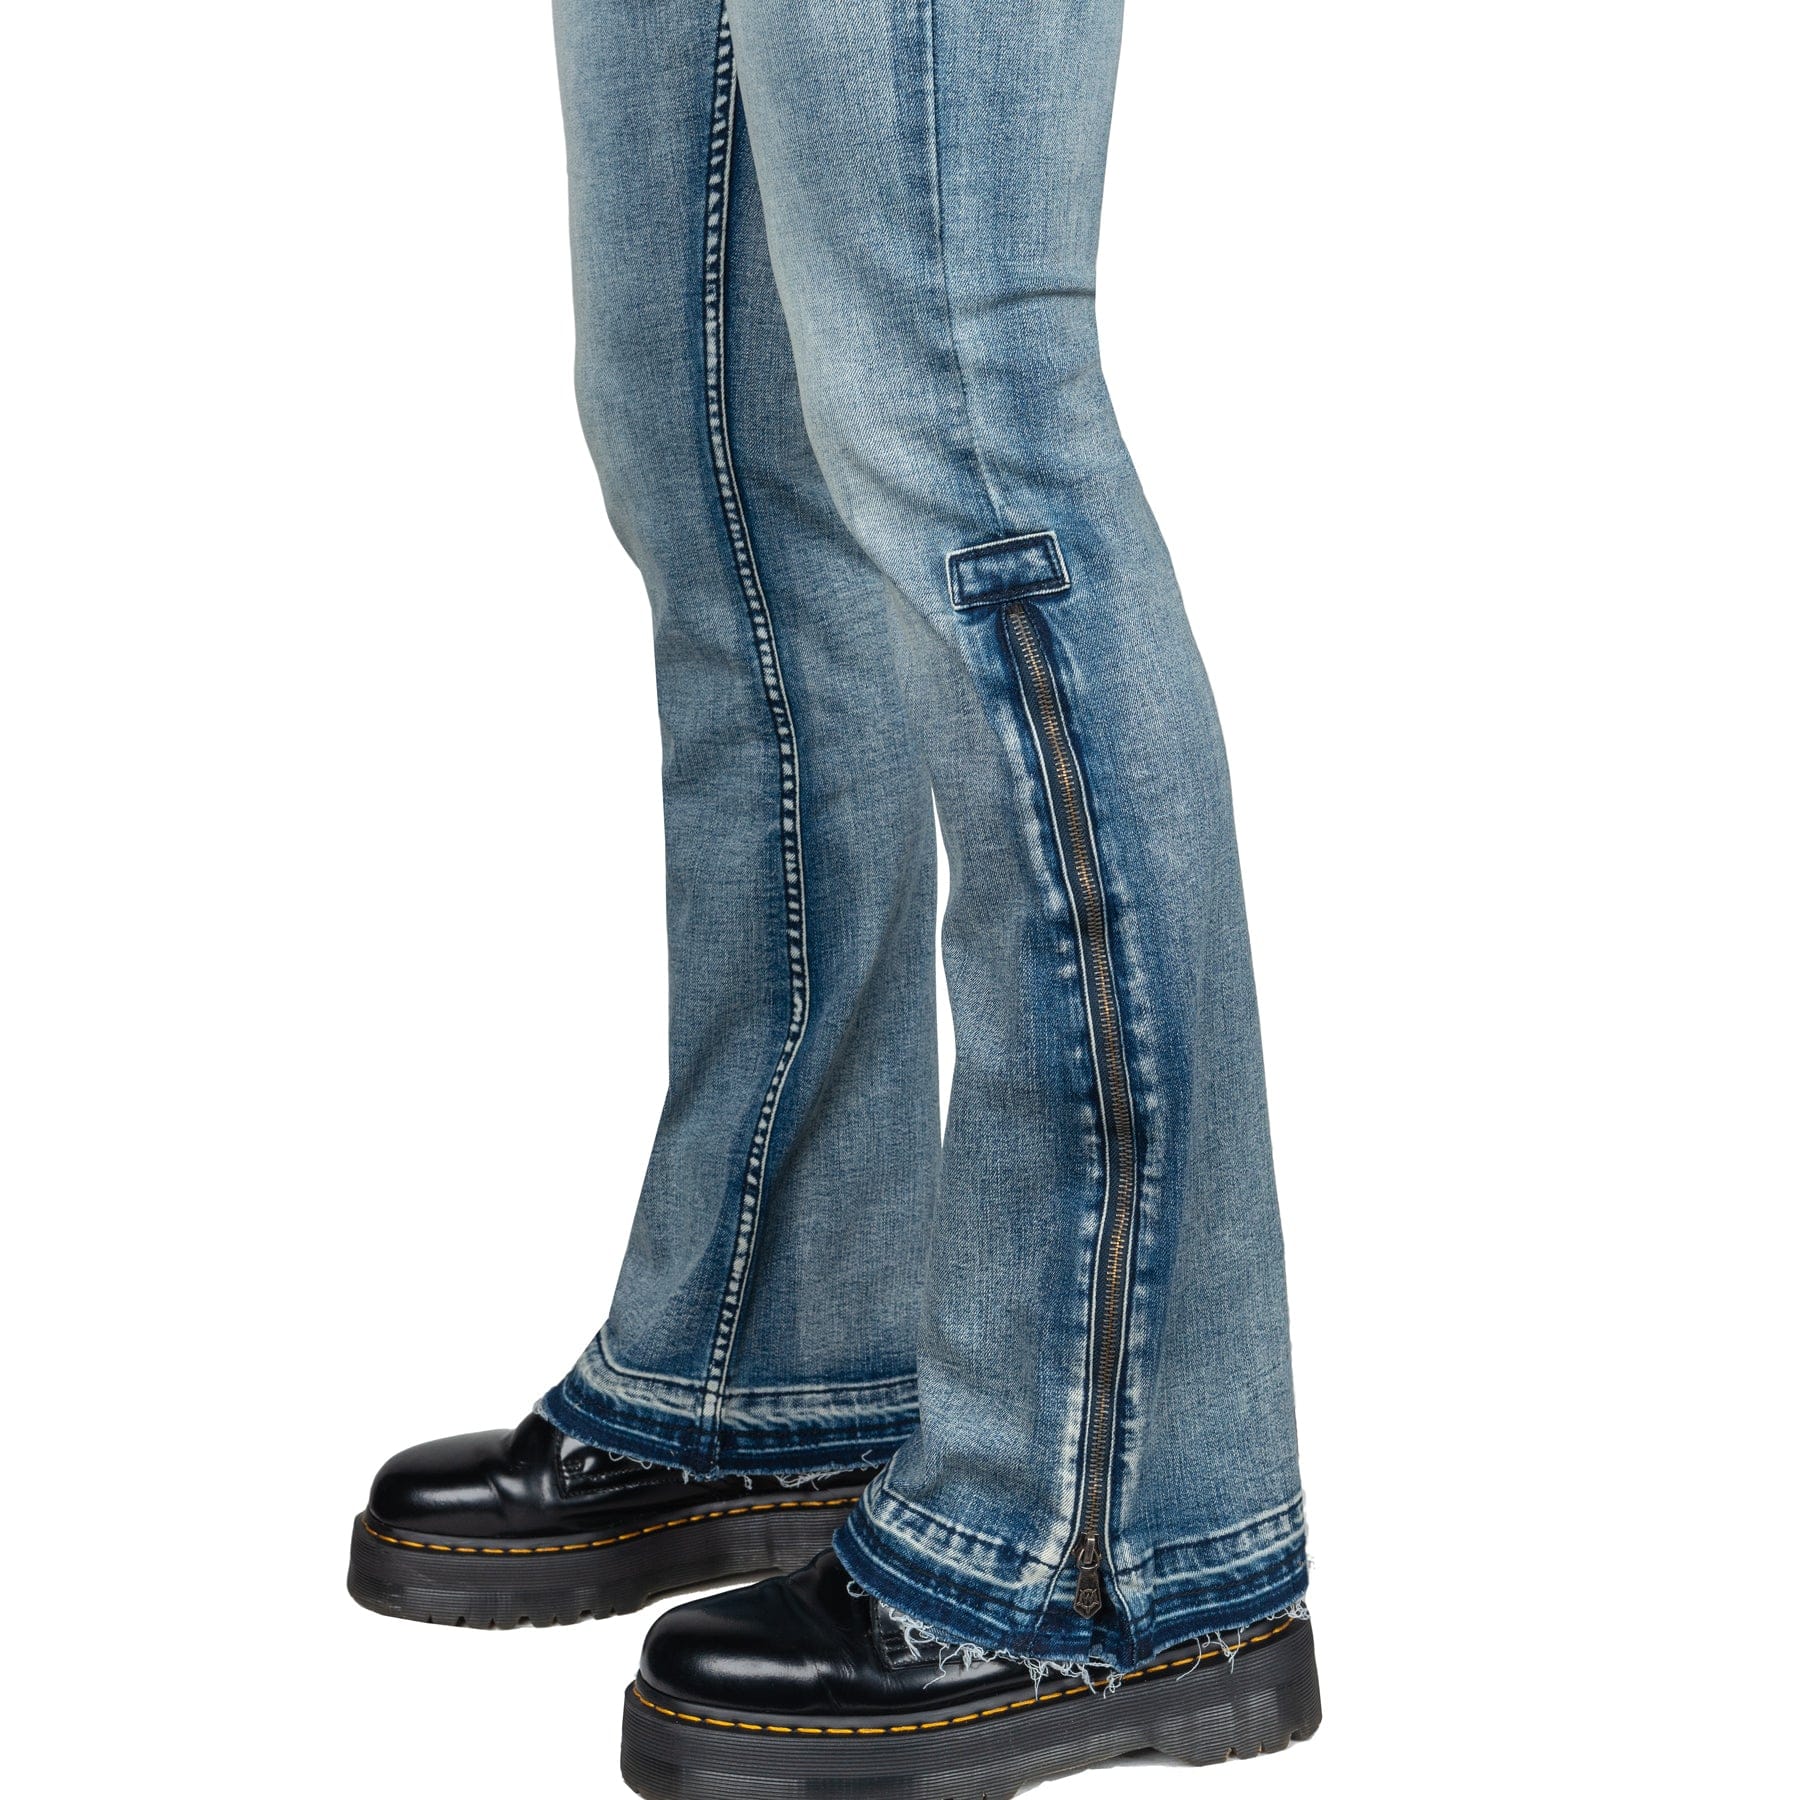 Bell bottom leggings ( Purple ) – BLU 66 Apparel